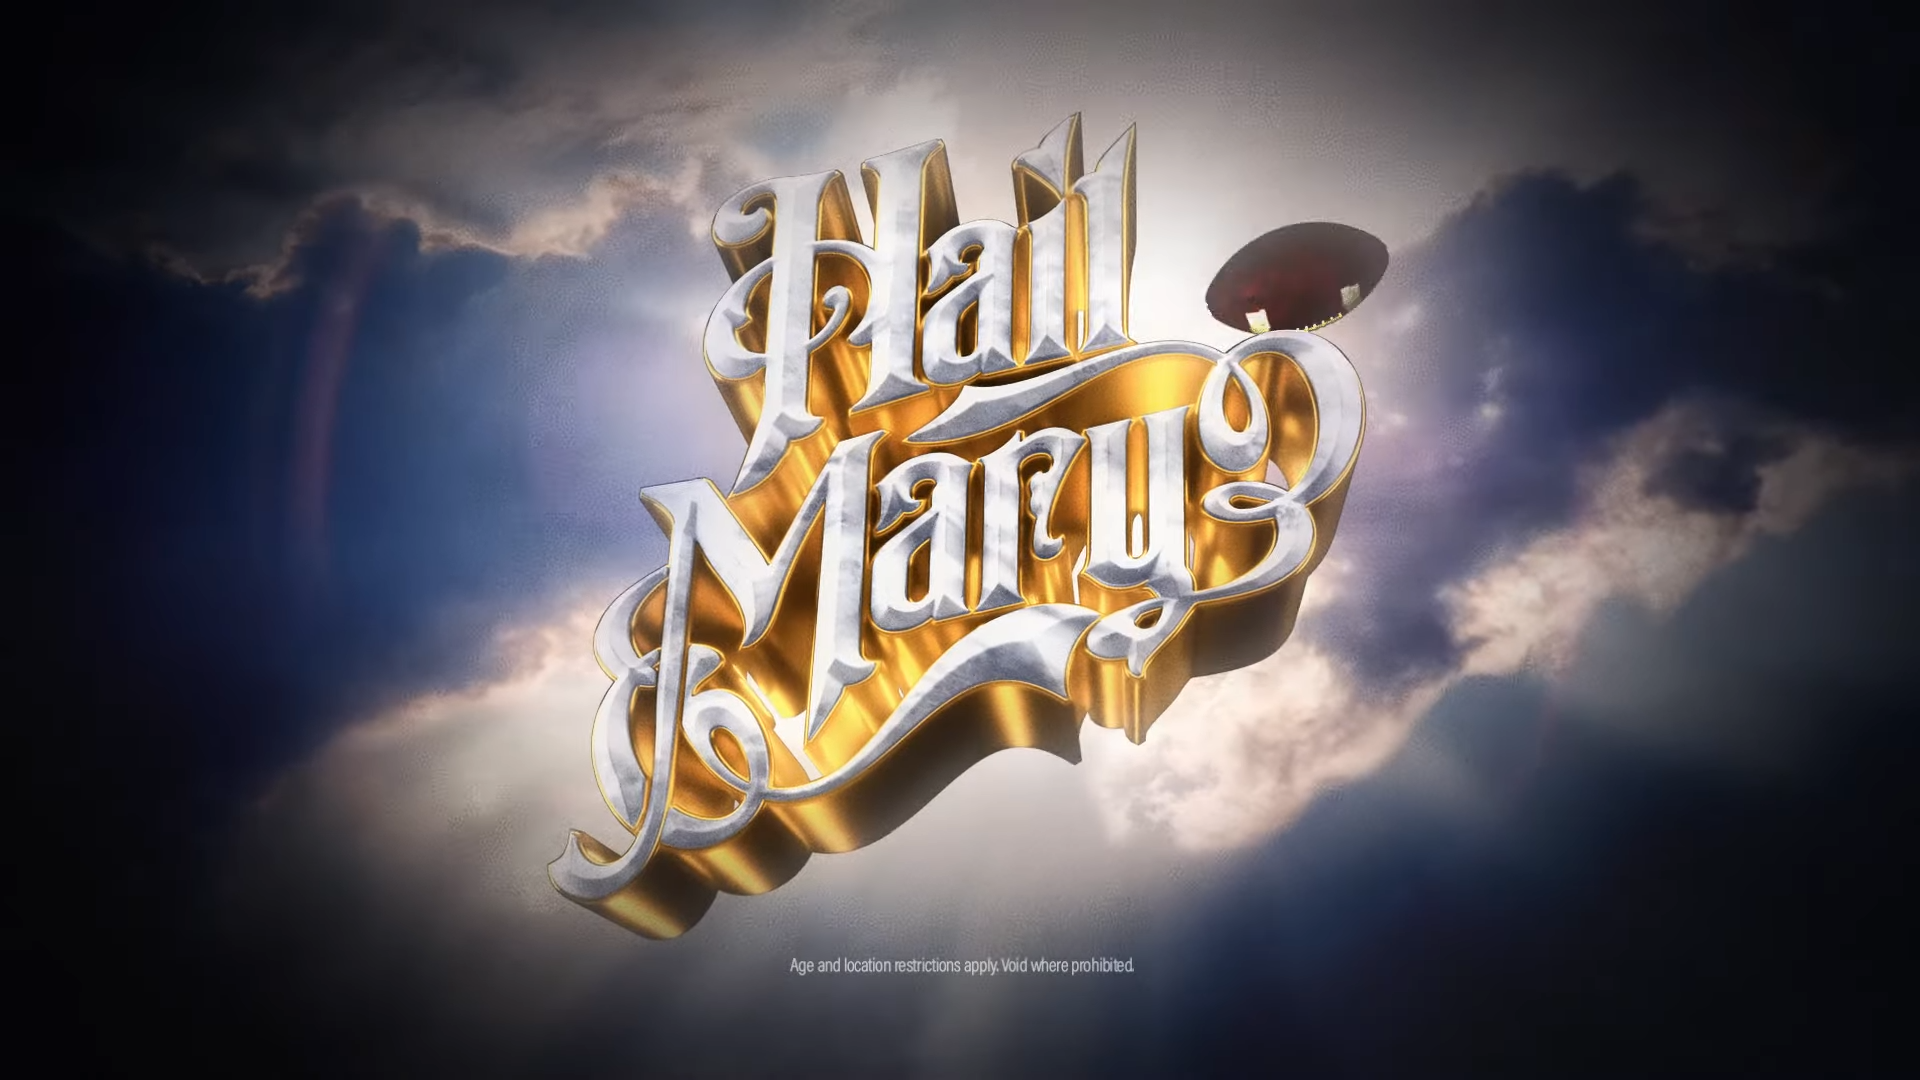 Gilded text against a blue sky that says "Hail Mary." A football flies past.